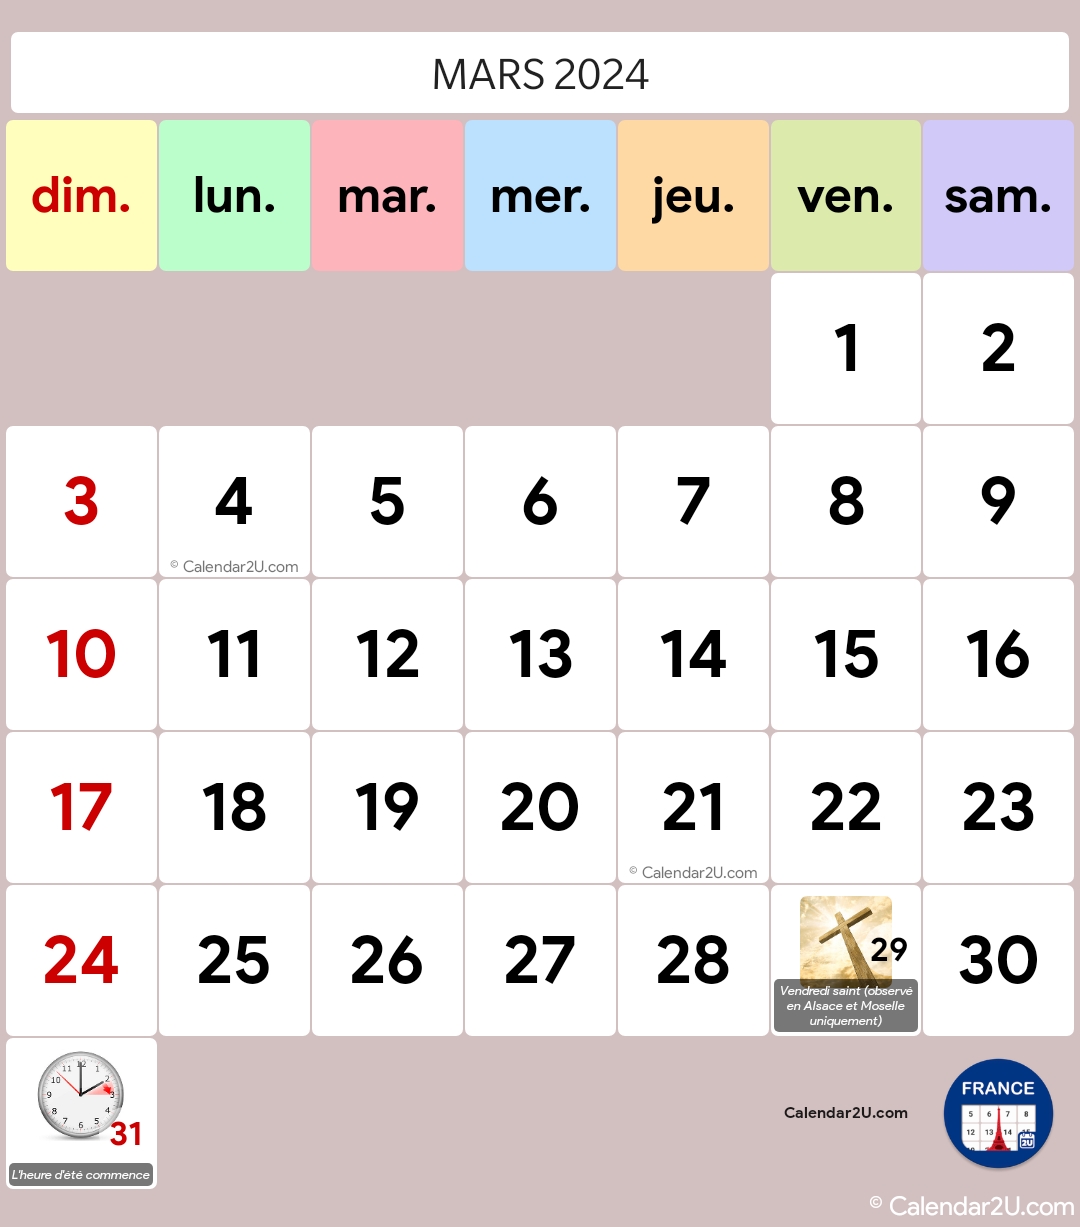 France (France Calendar